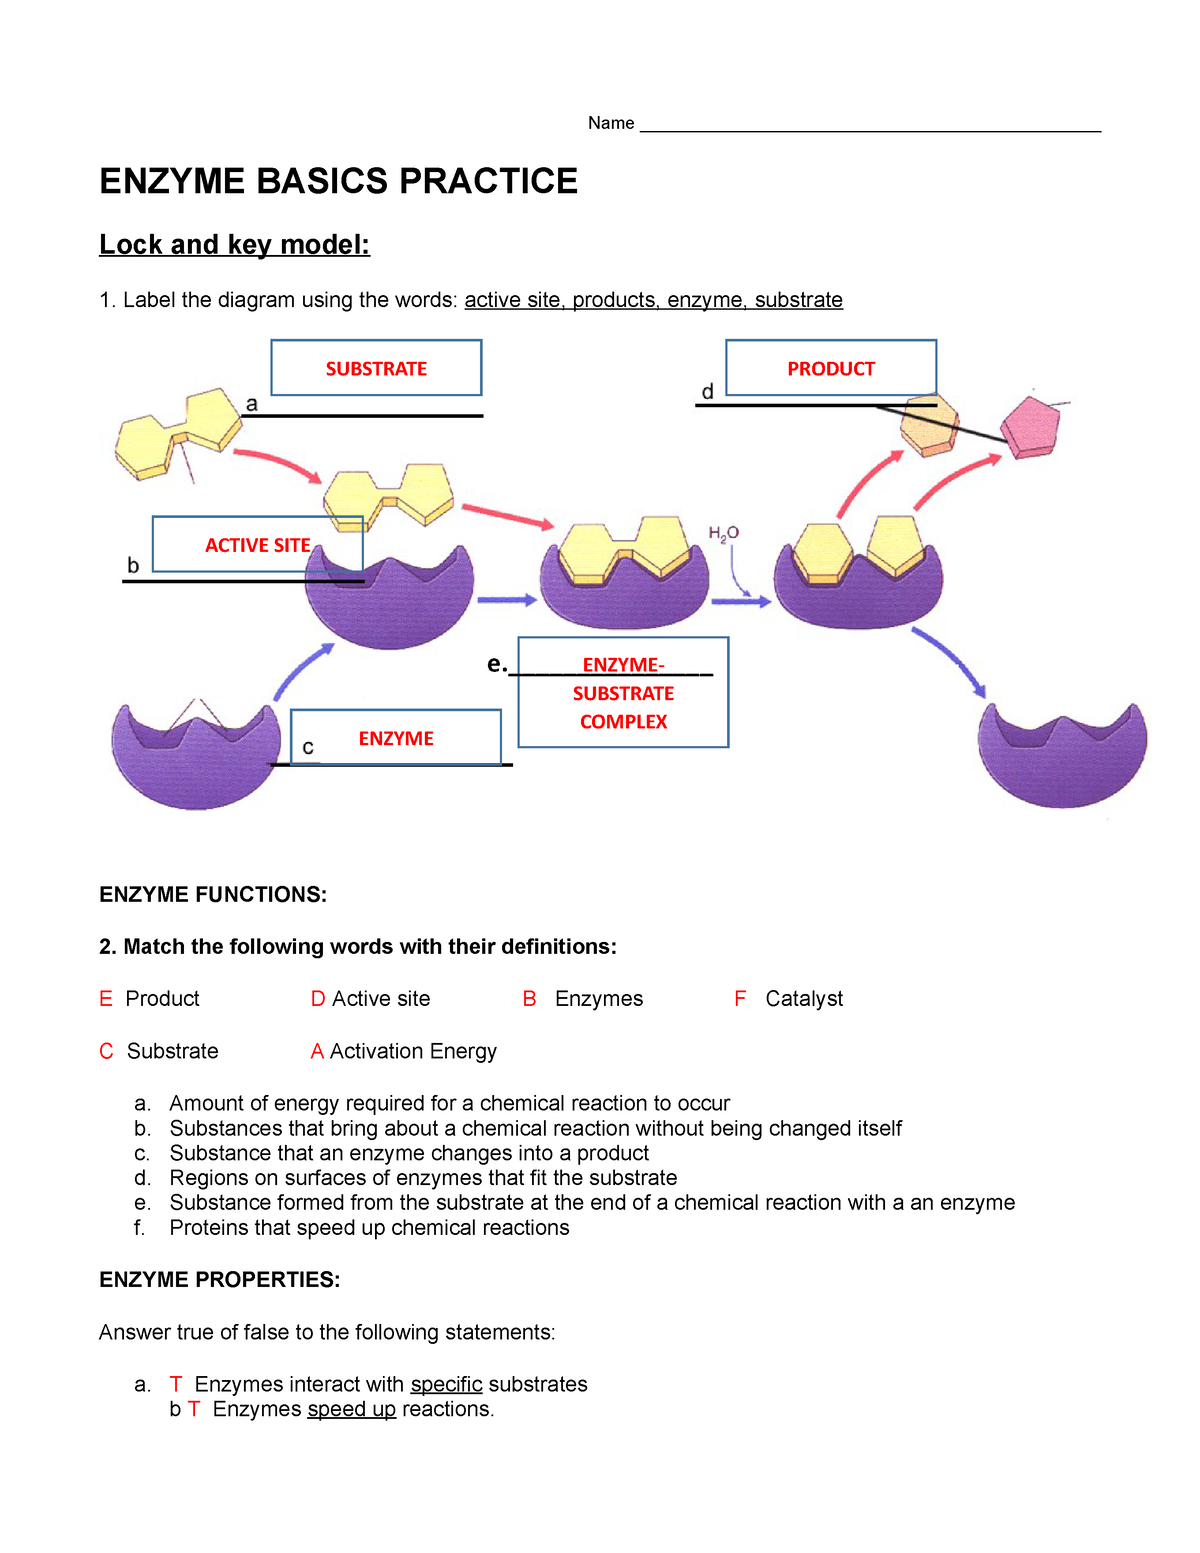 enzyme-basics-practice-key-2hg9sph-name